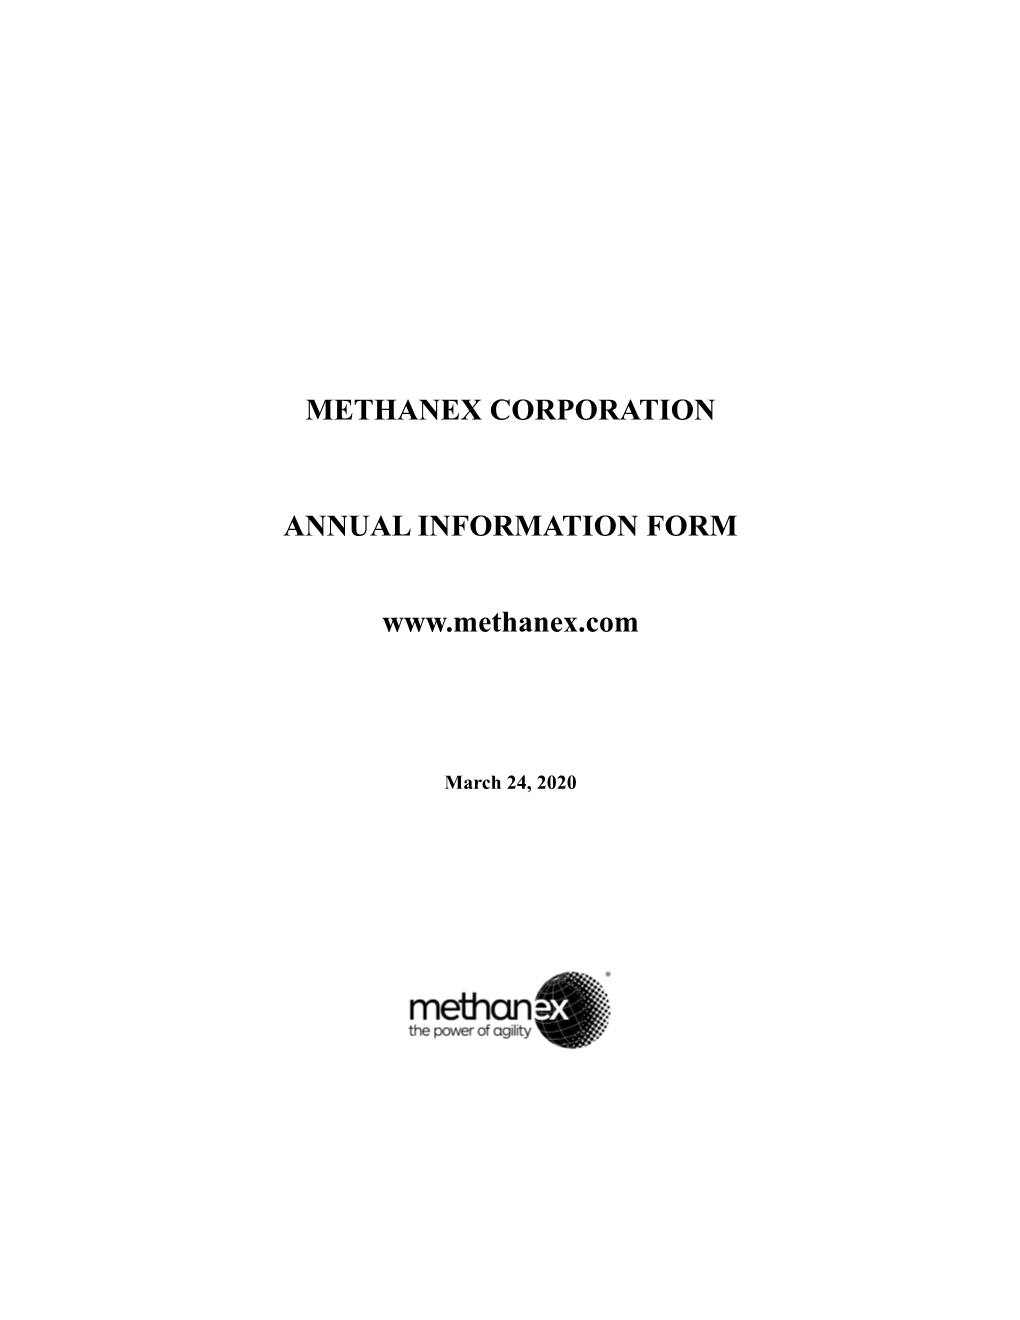 Methanex Corporation Annual Information Form